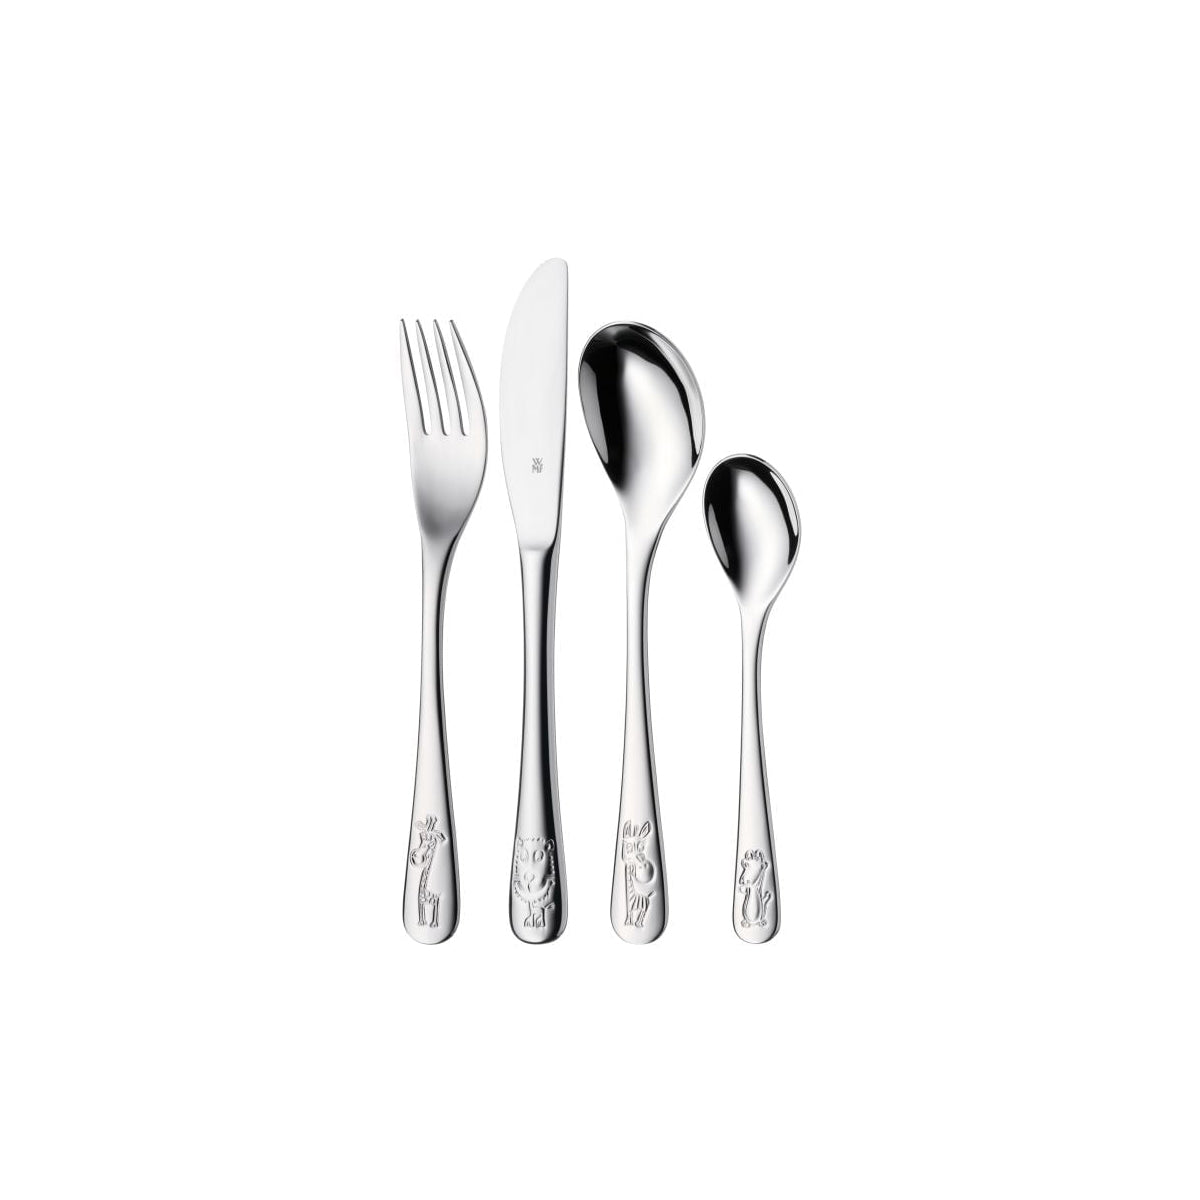 Safari 4pc Chiildren's Cutlery Set